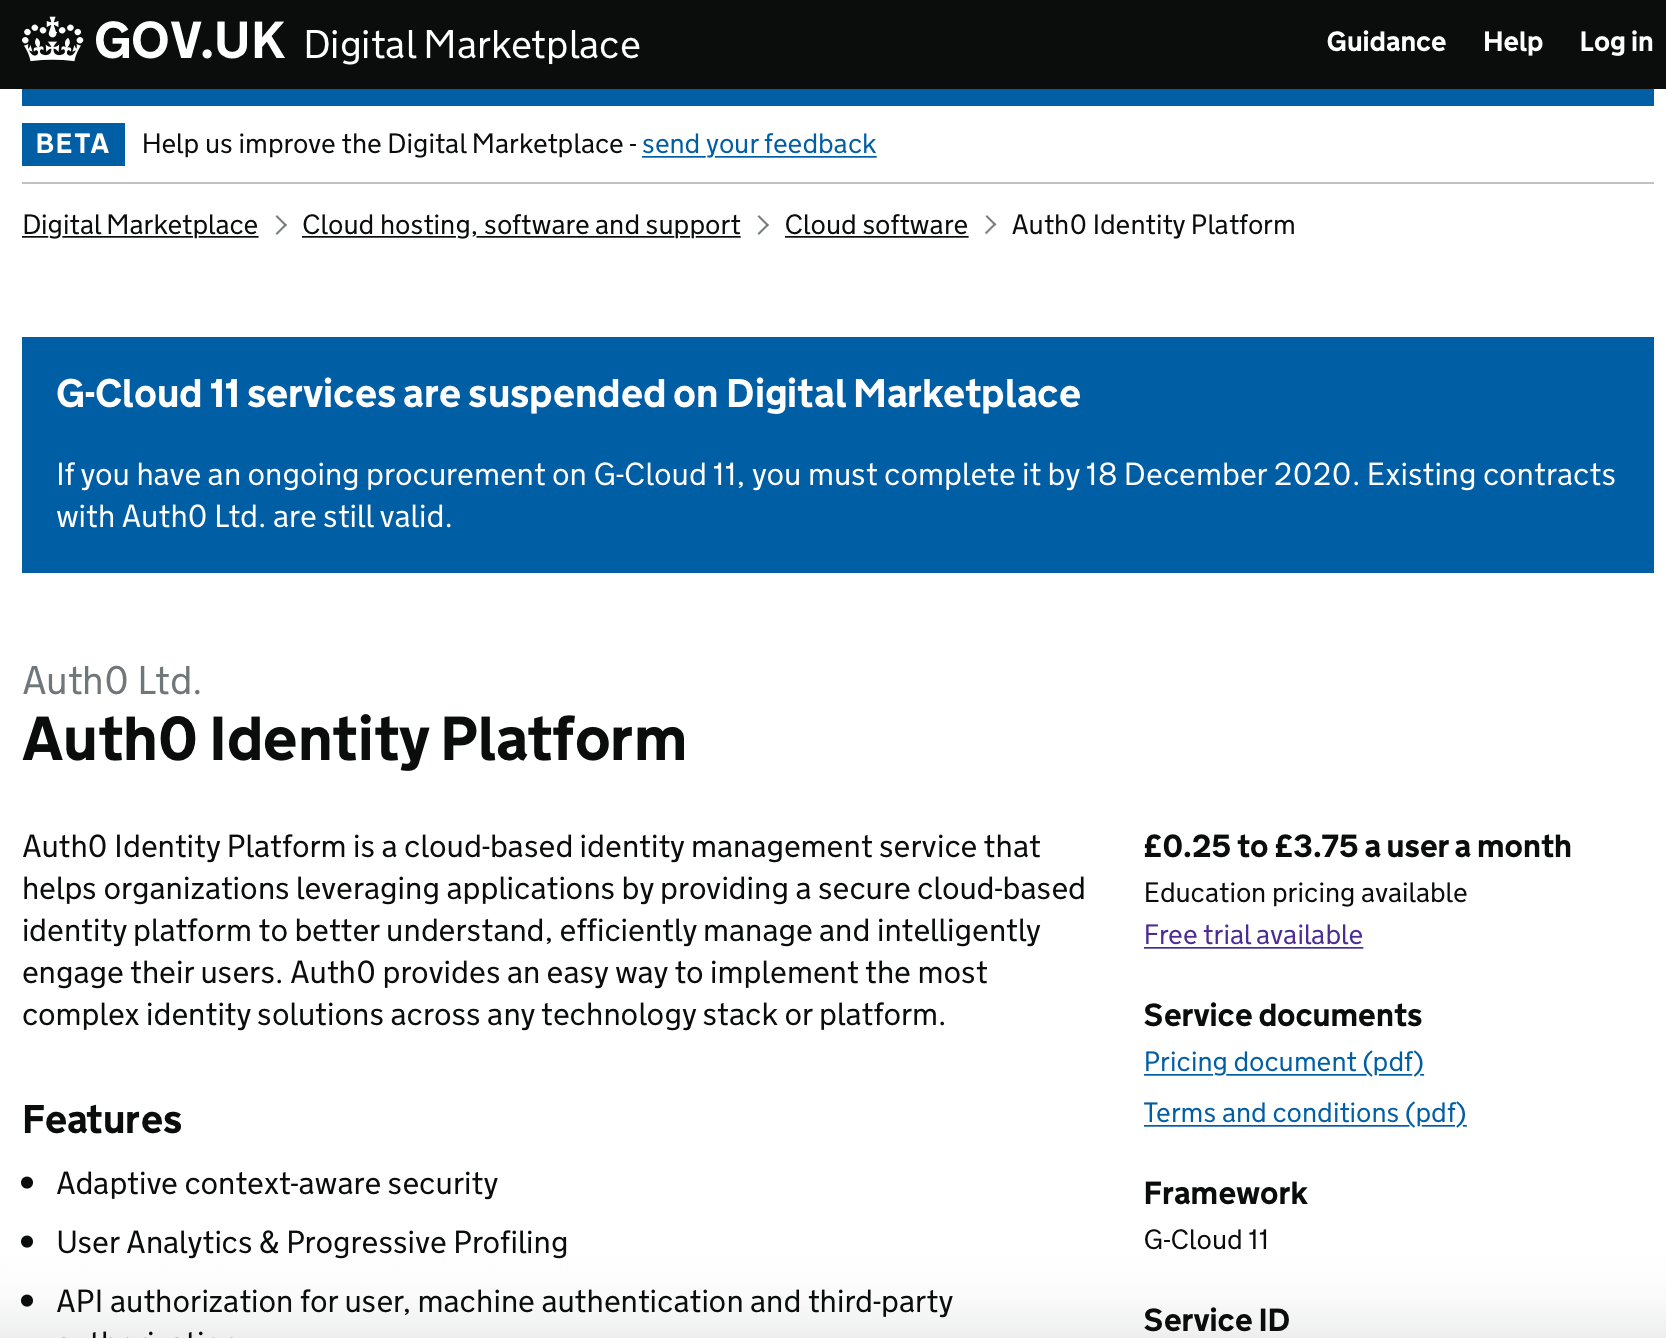 Auth0 Identity Platform